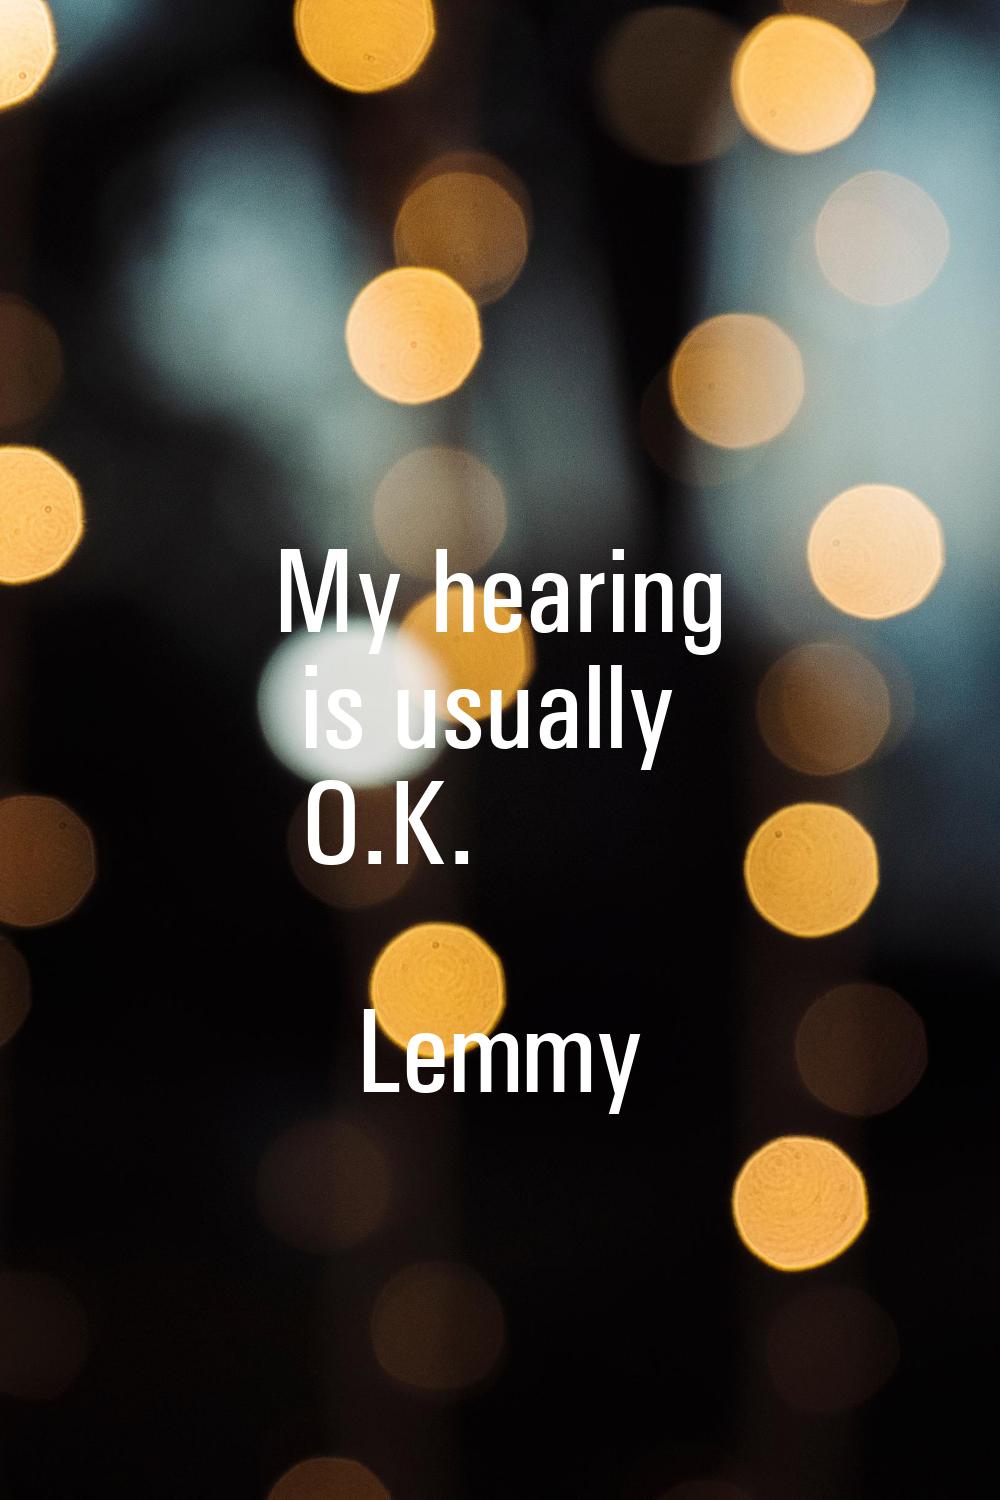 My hearing is usually O.K.